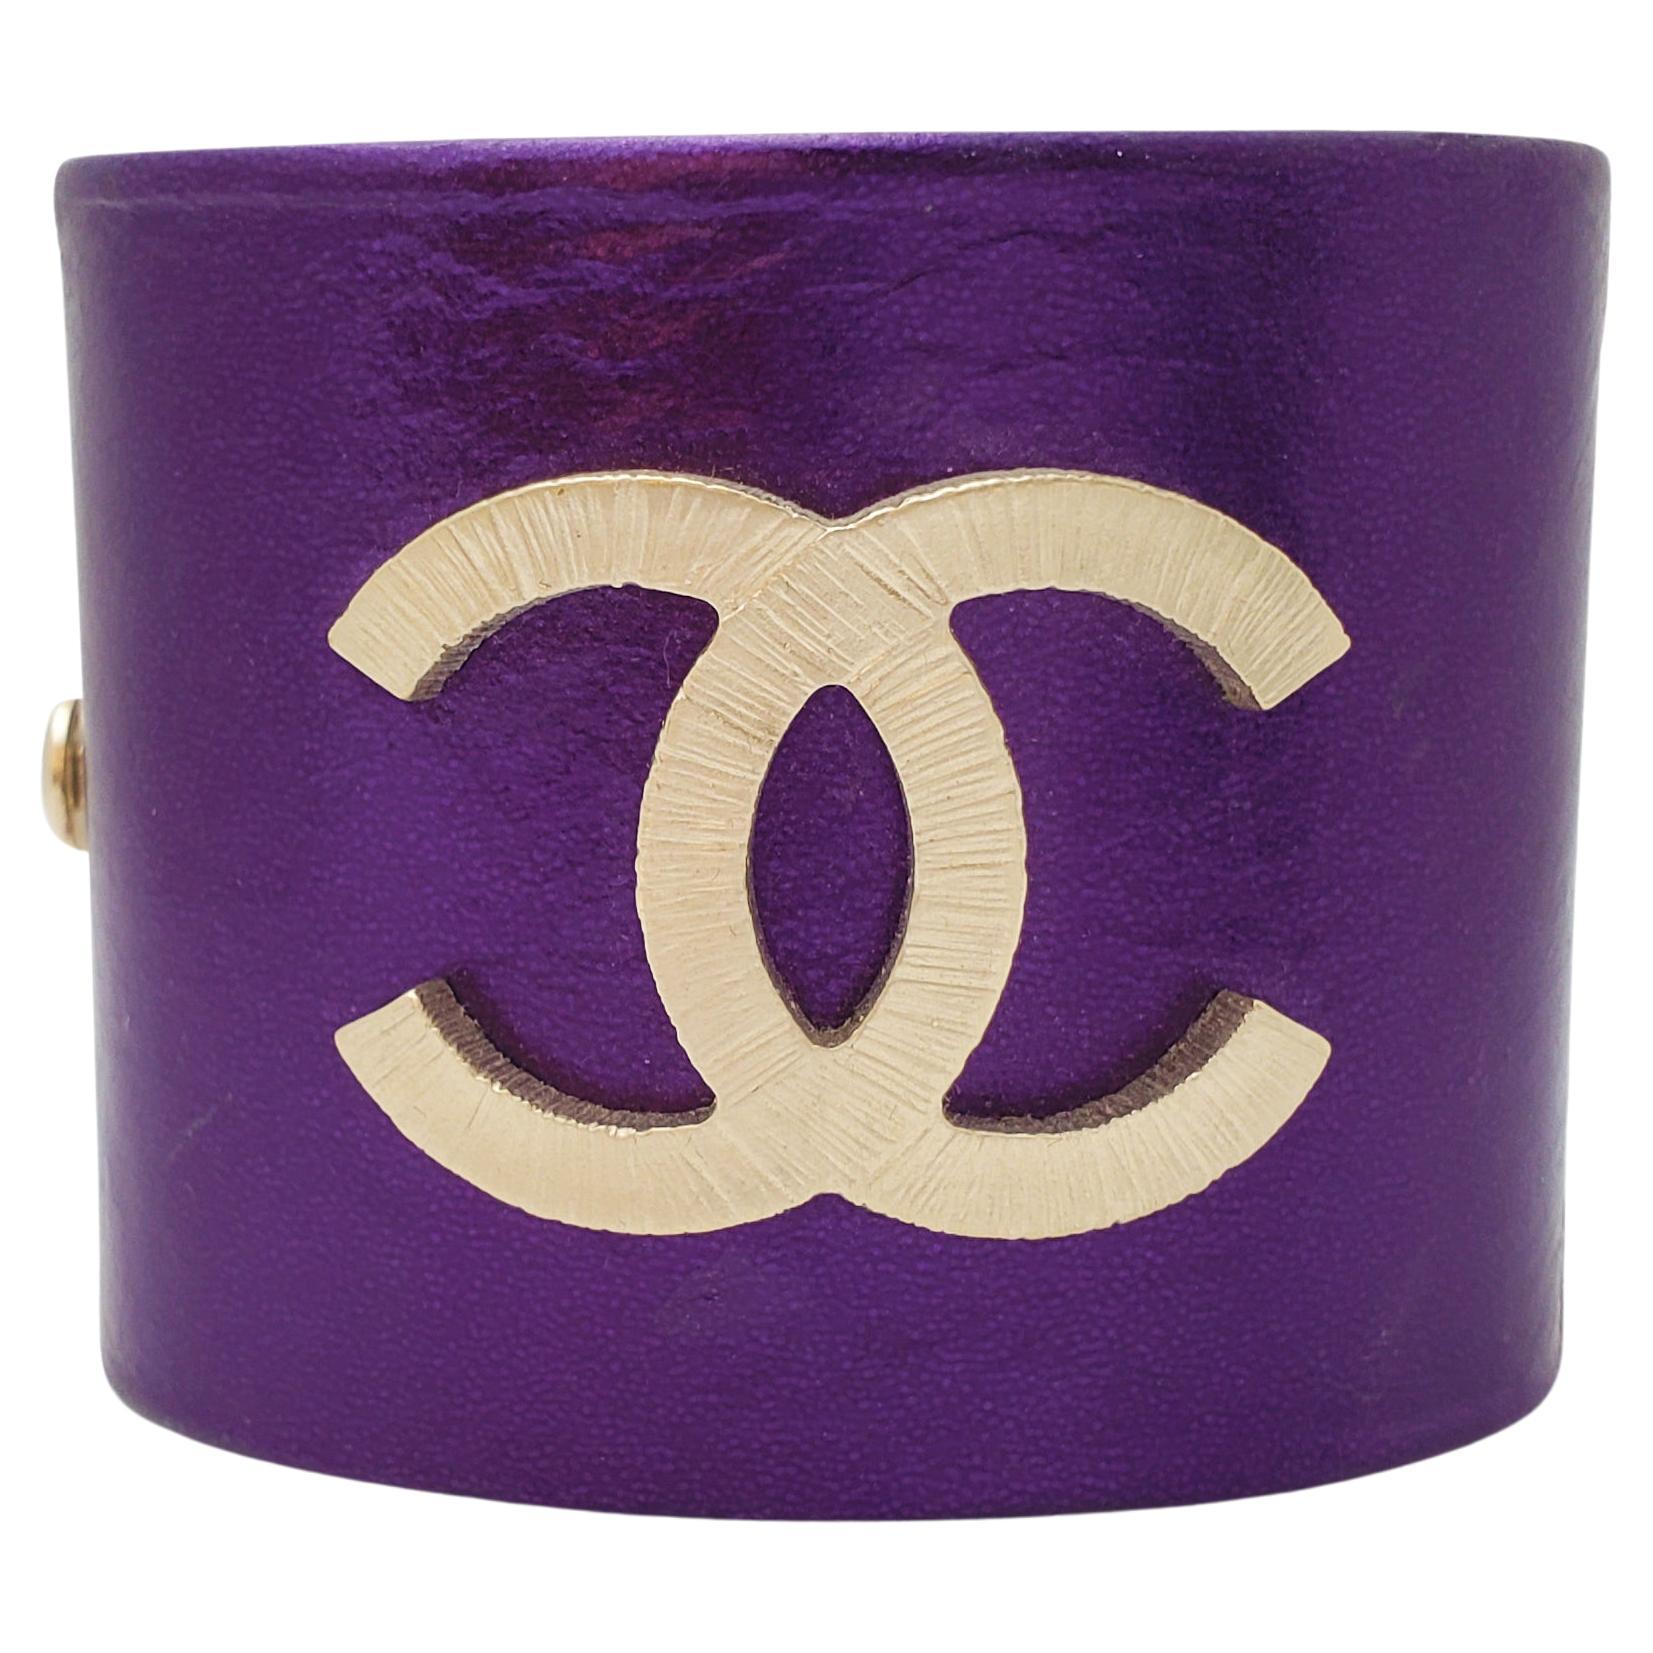 Chanel 'Double C' Purple Leather Hinged Cuff Bracelet